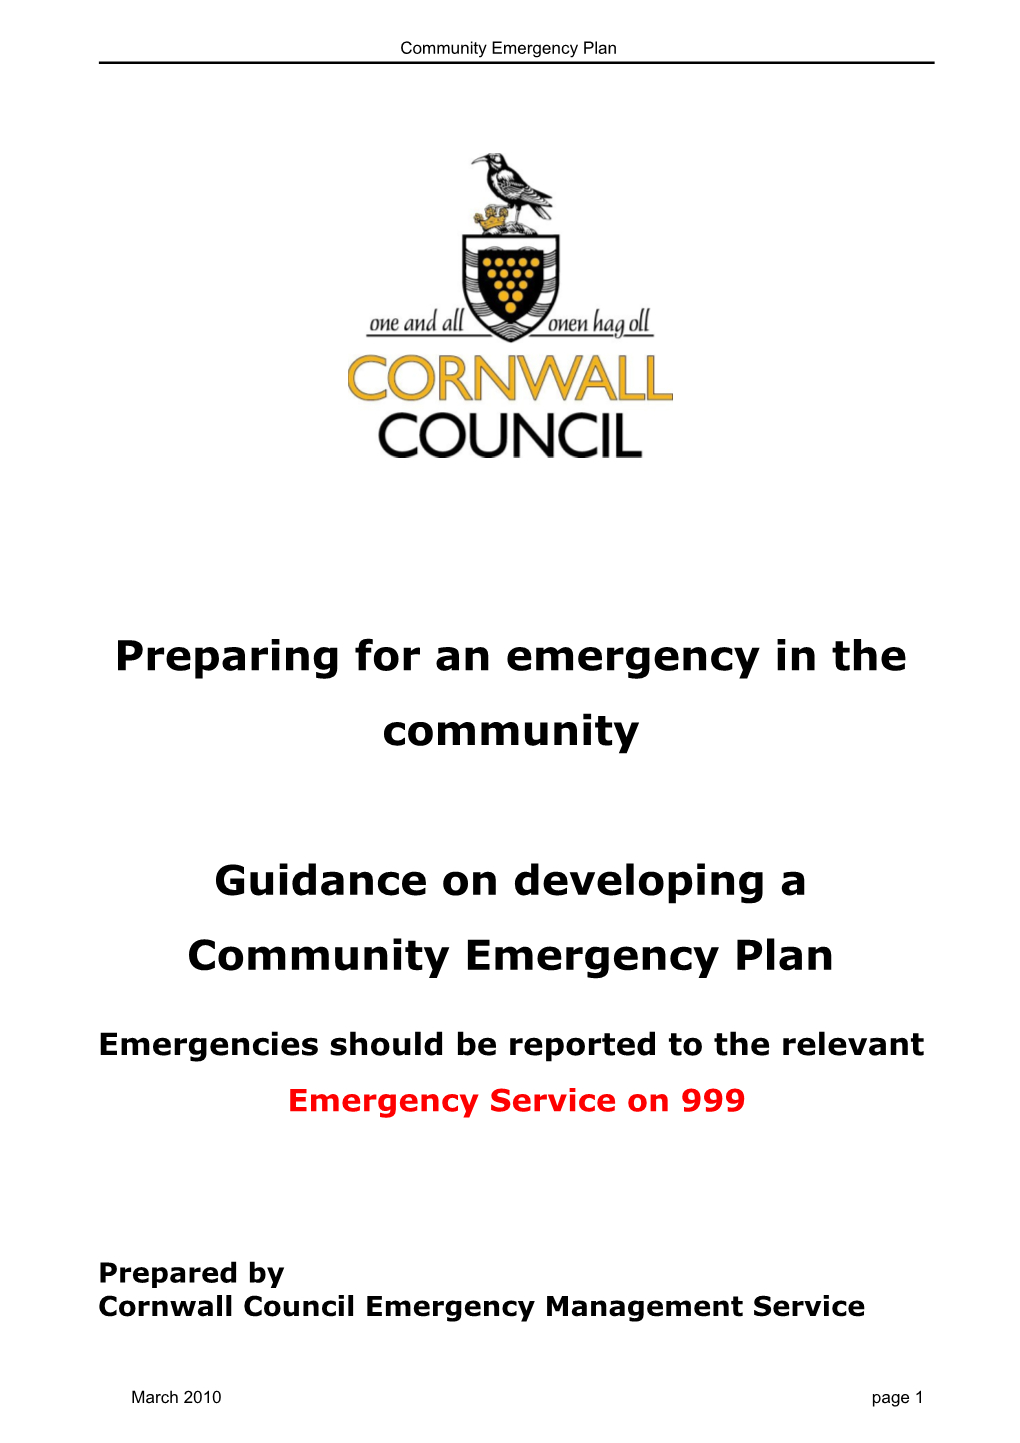 Community Emergency Plan Guidance